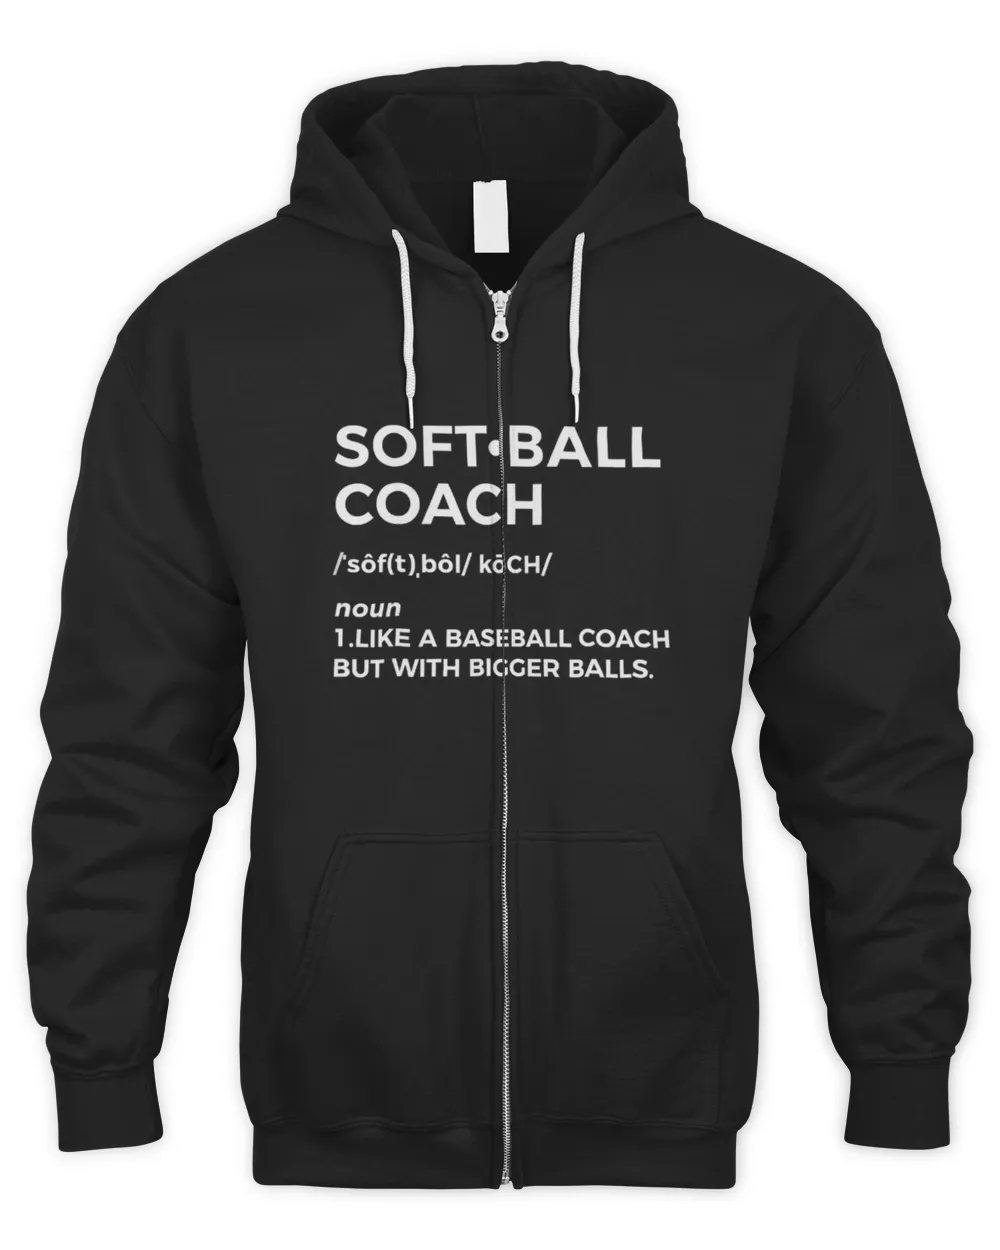 Funny Softball Coach Tshirt Gift - Softball Coach Tee